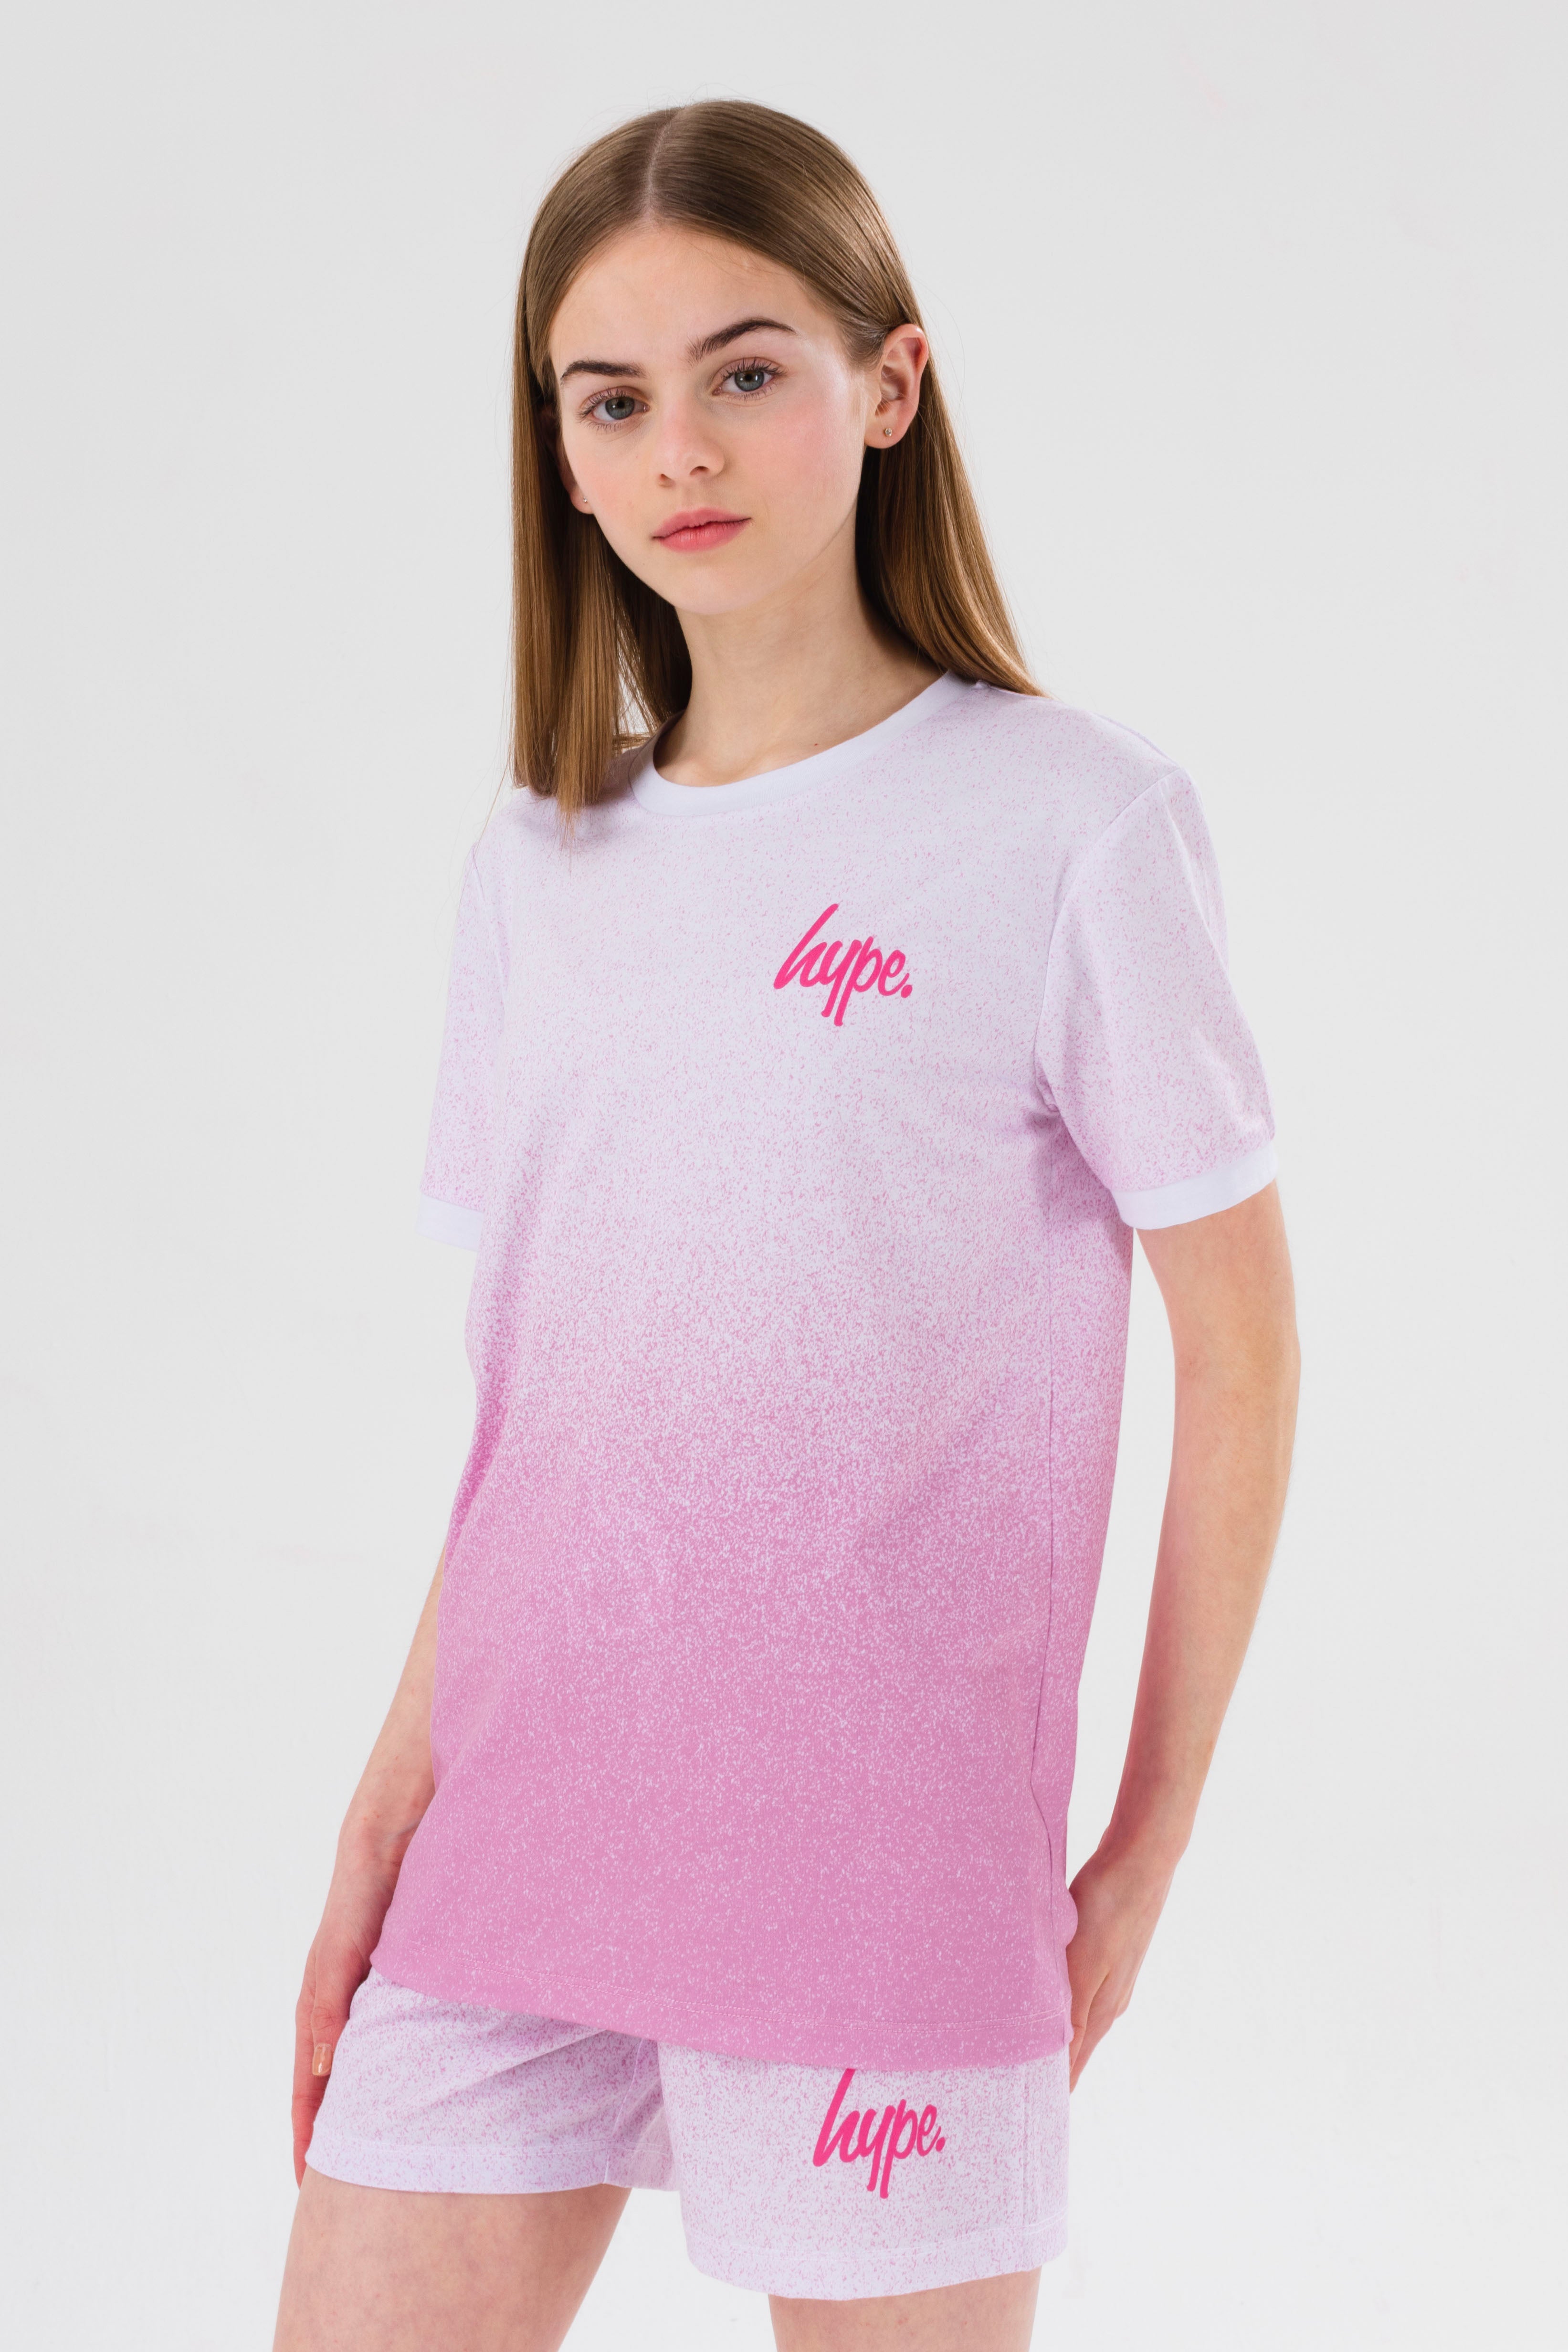 hype girls pink speckle fade script shorts pj’s